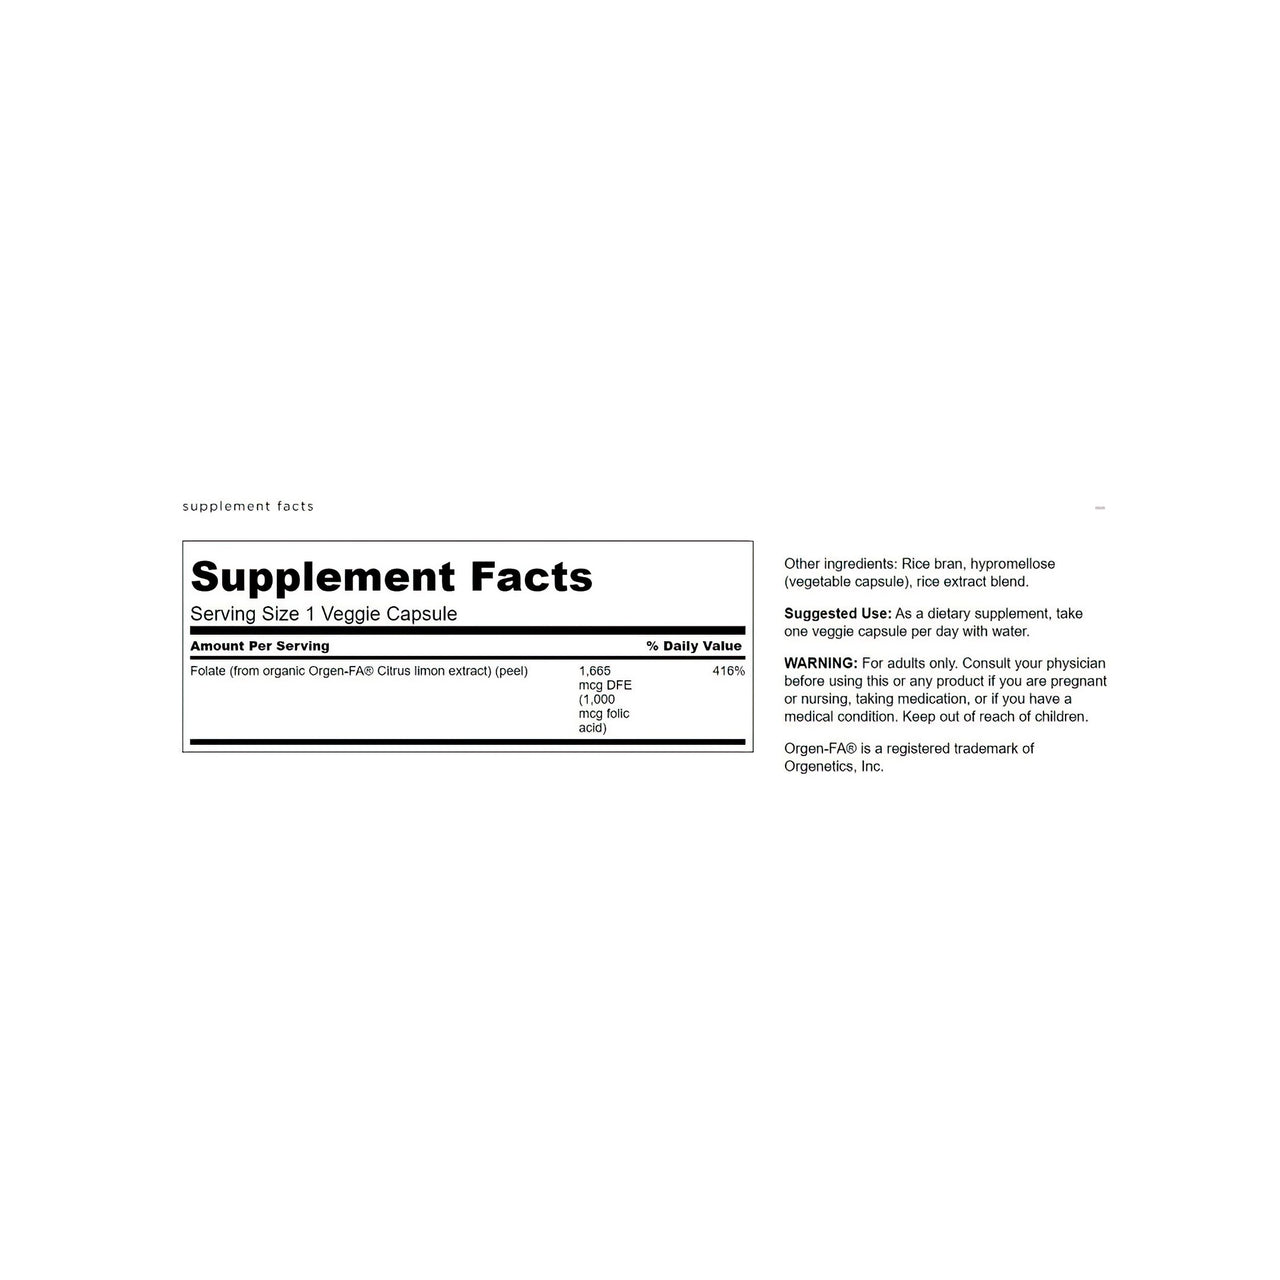 A label for Swanson Folic Acid - 1000 mcg 100 veggie capsules Real Food supplement.